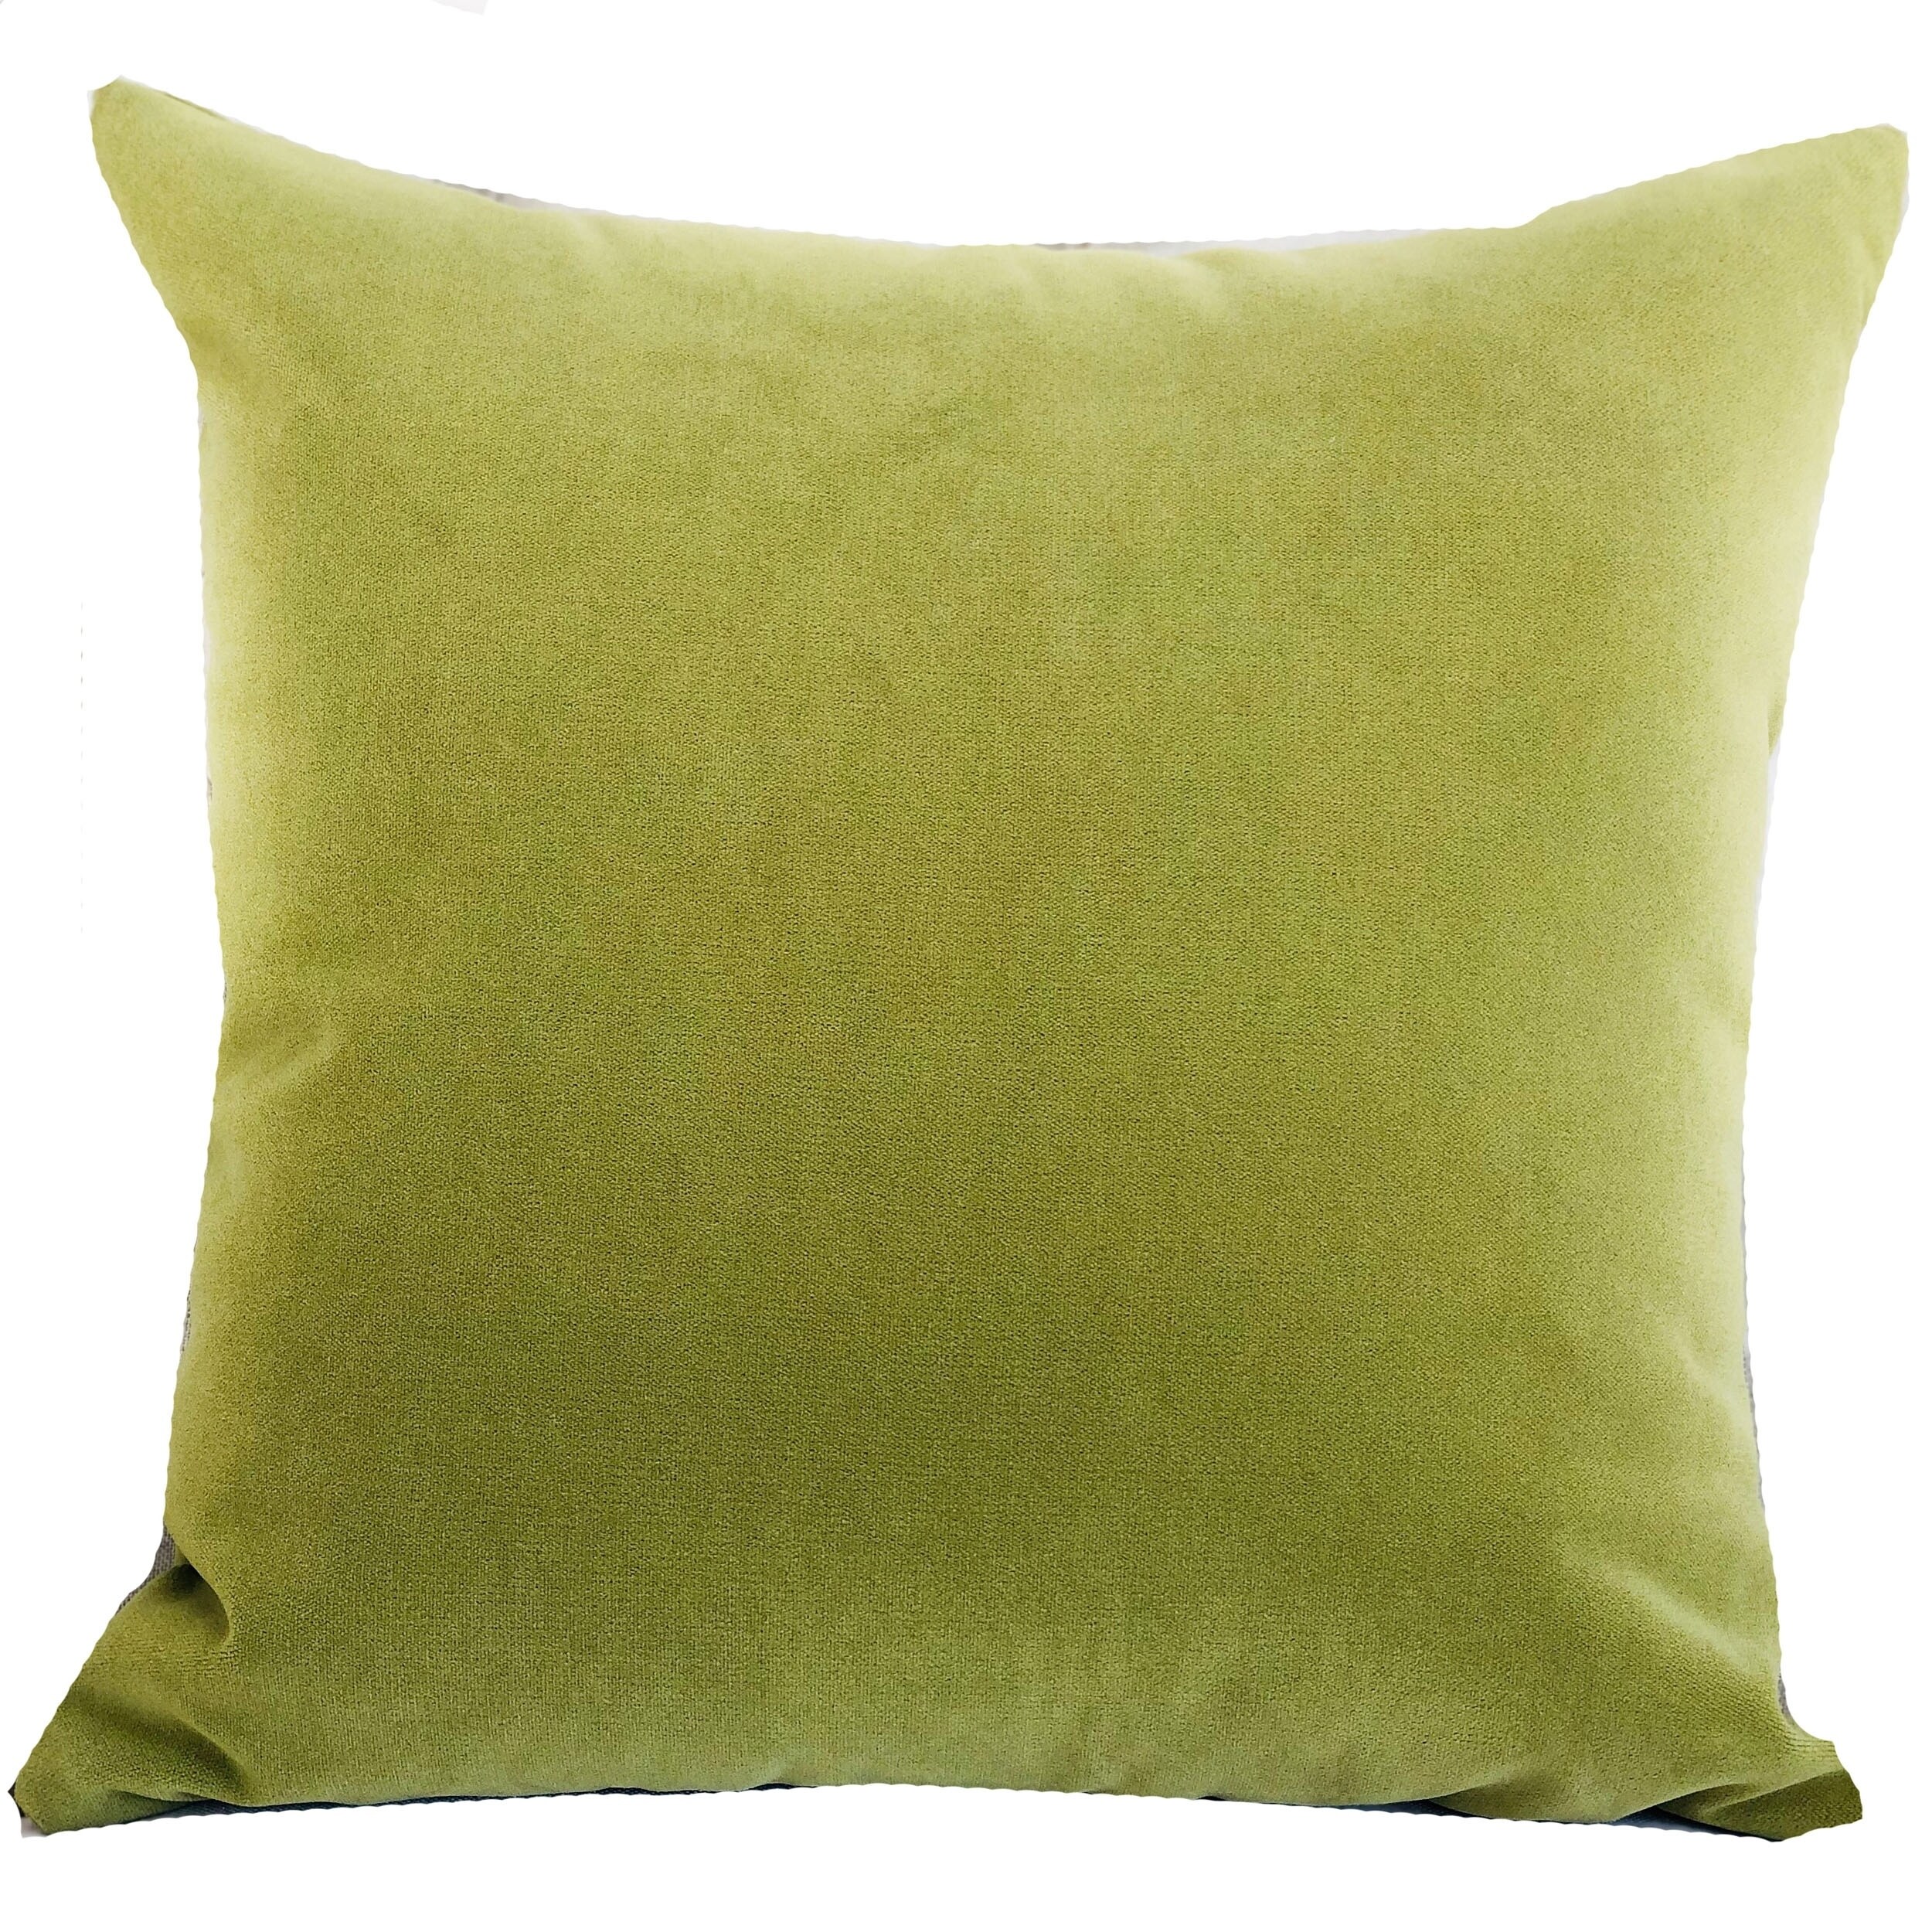 pistachio green cushions